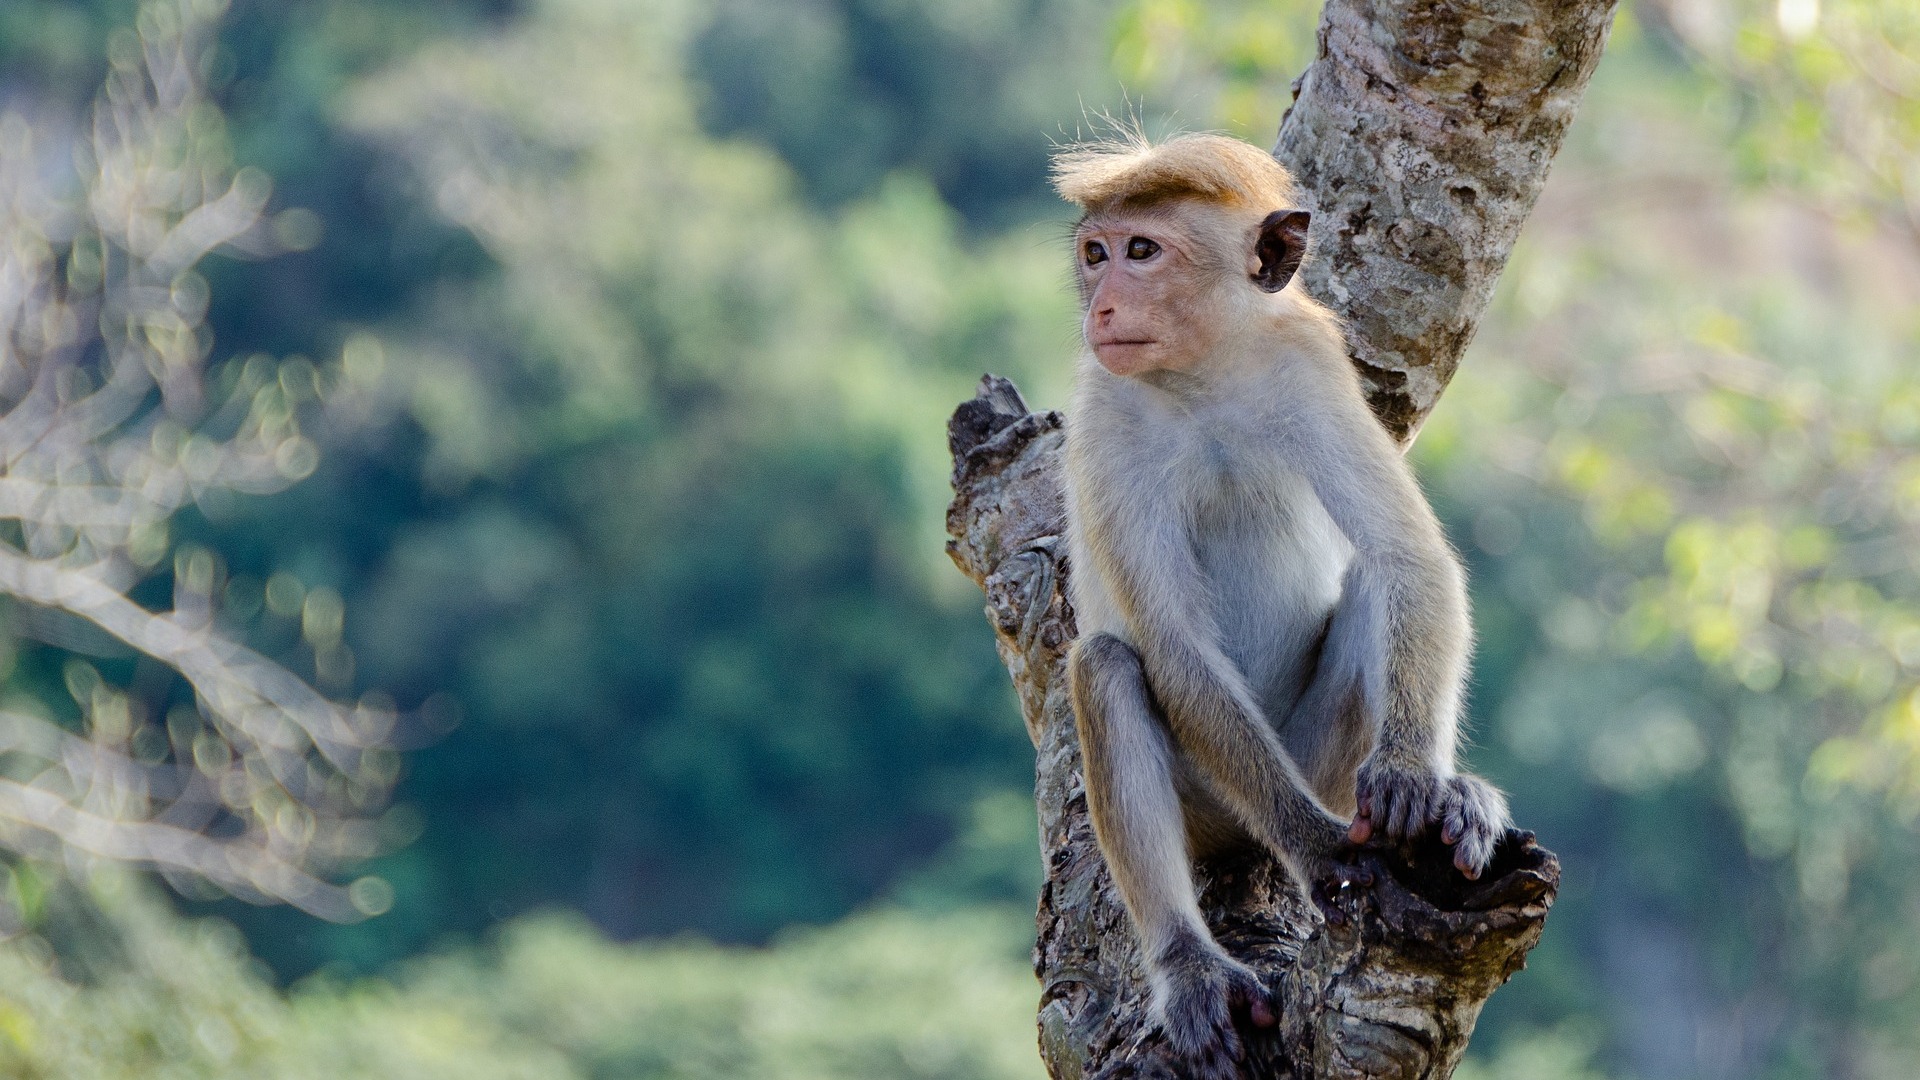 Sri Lanka considers selling 100,000 endangered monkeys to China, reports say | ITV News